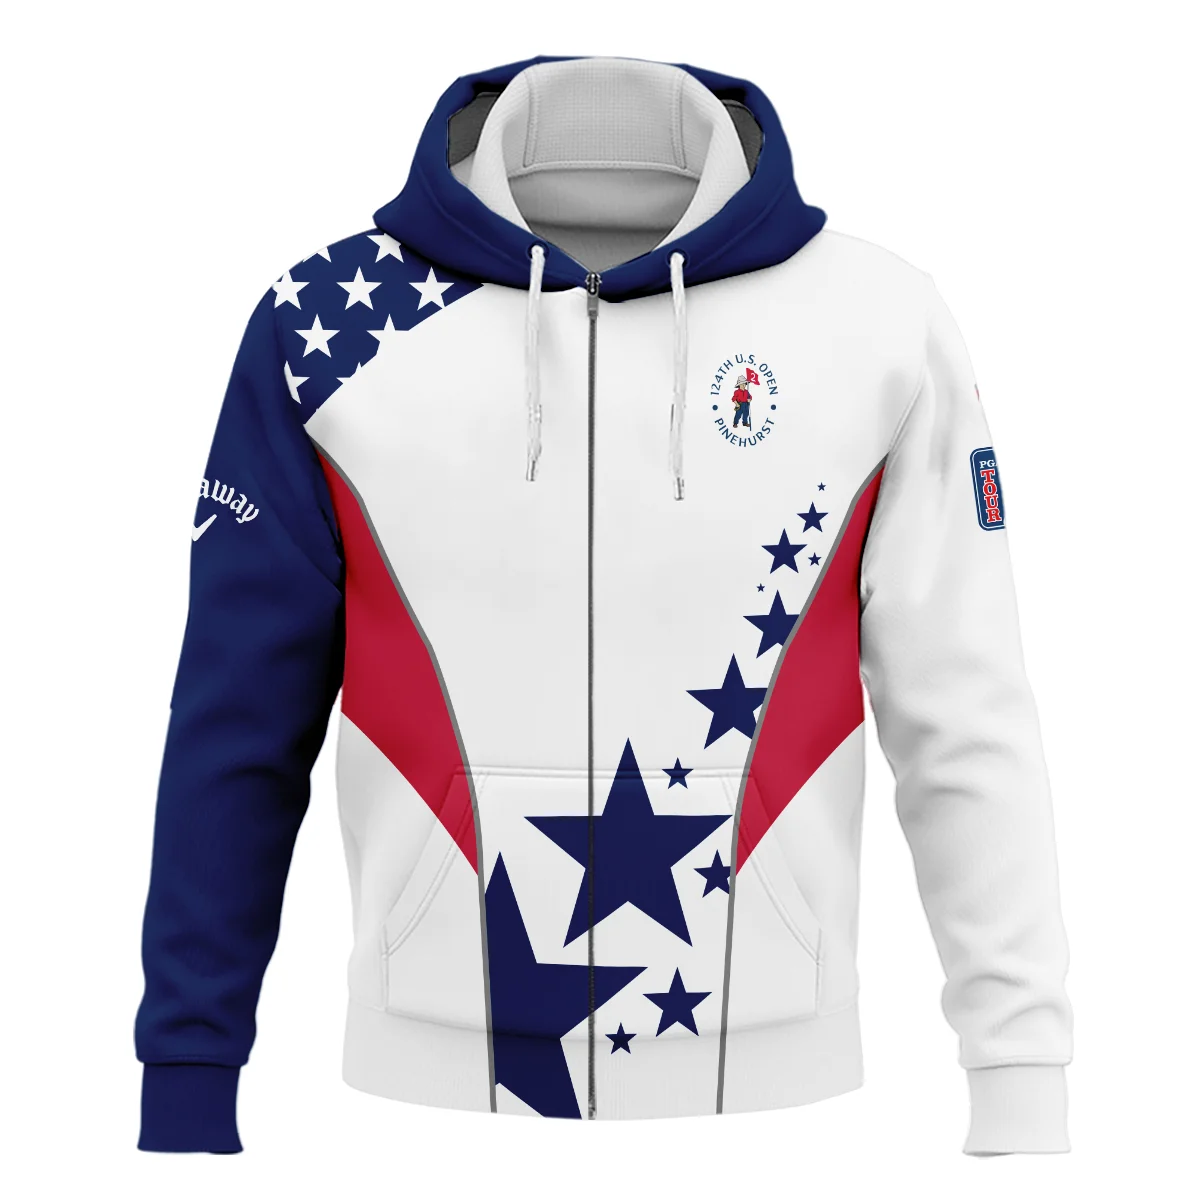 124th U.S. Open Pinehurst Callaway Stars US Flag White Blue Long Polo Shirt Style Classic Long Polo Shirt For Men